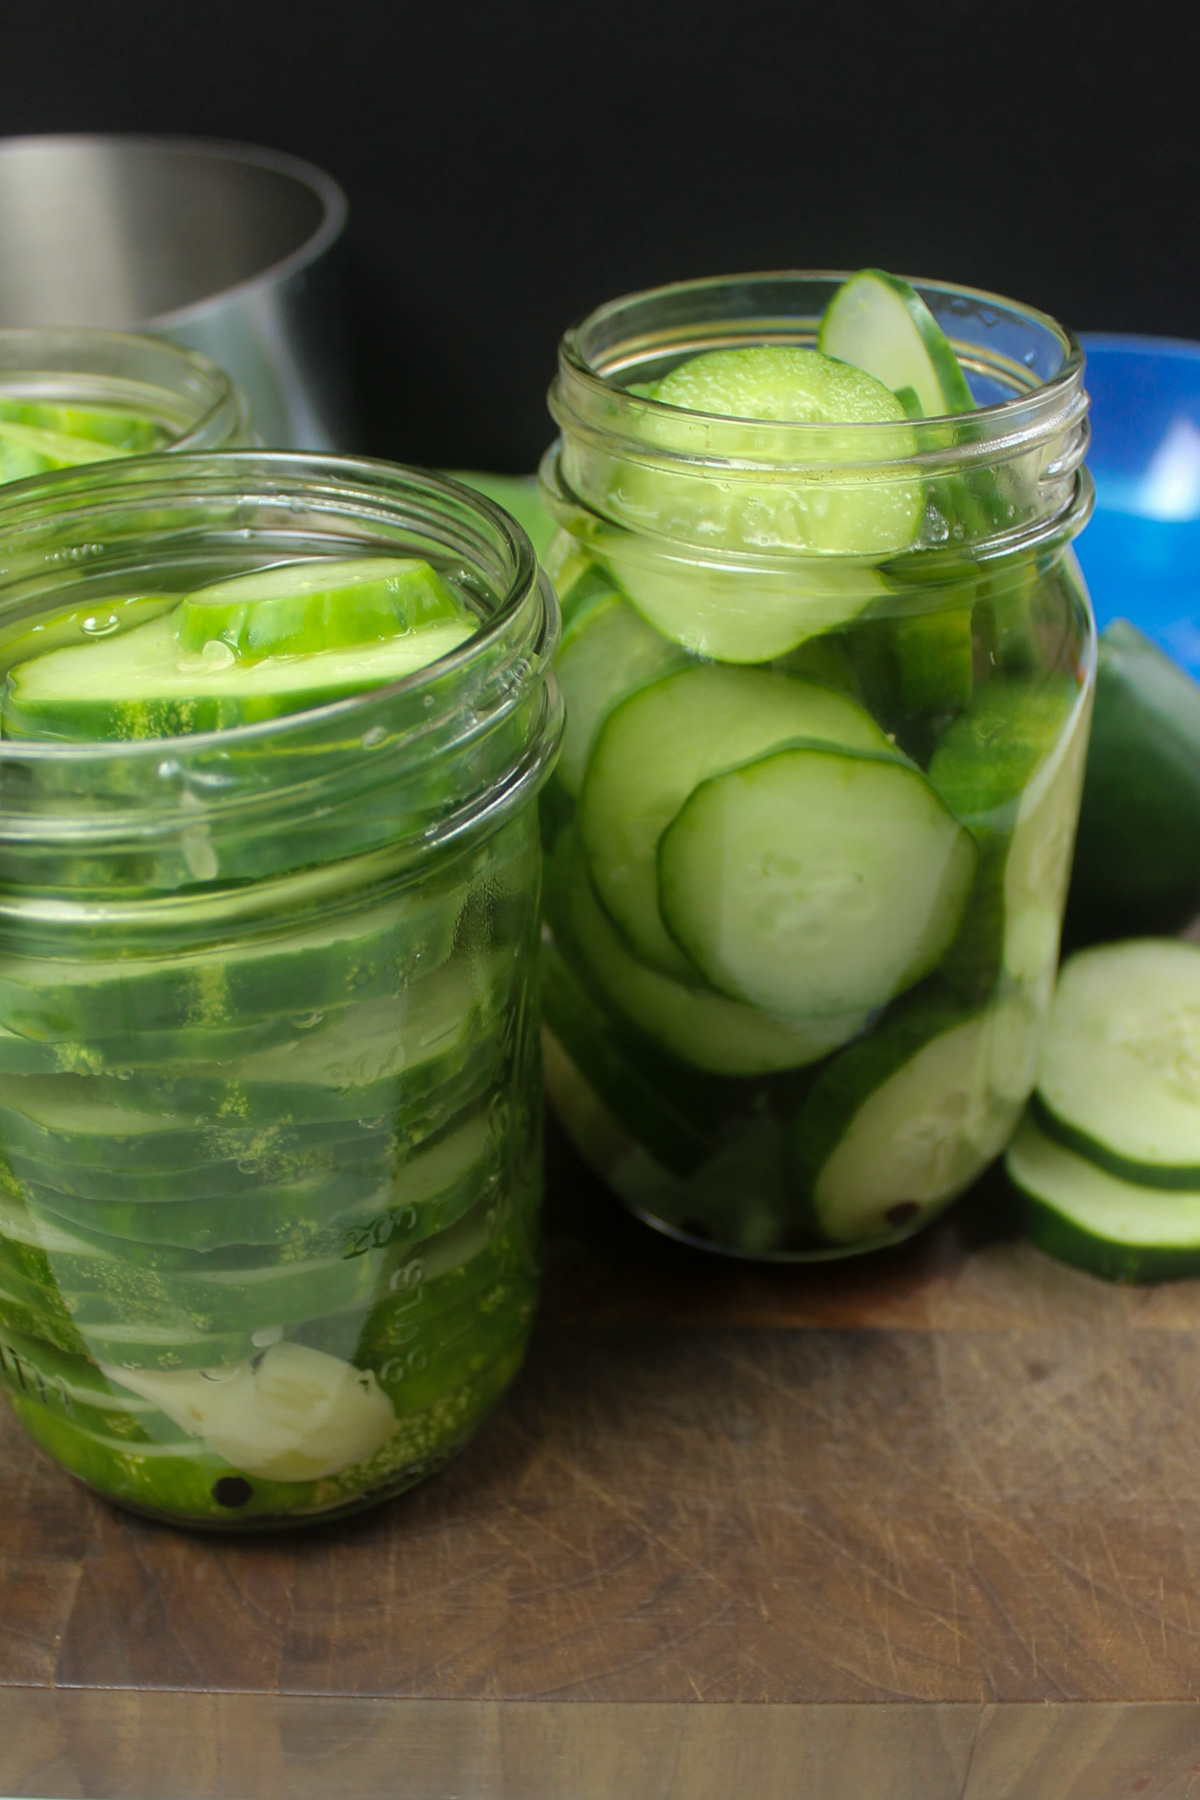 Hot brine added to jars of sliced cucumbers.